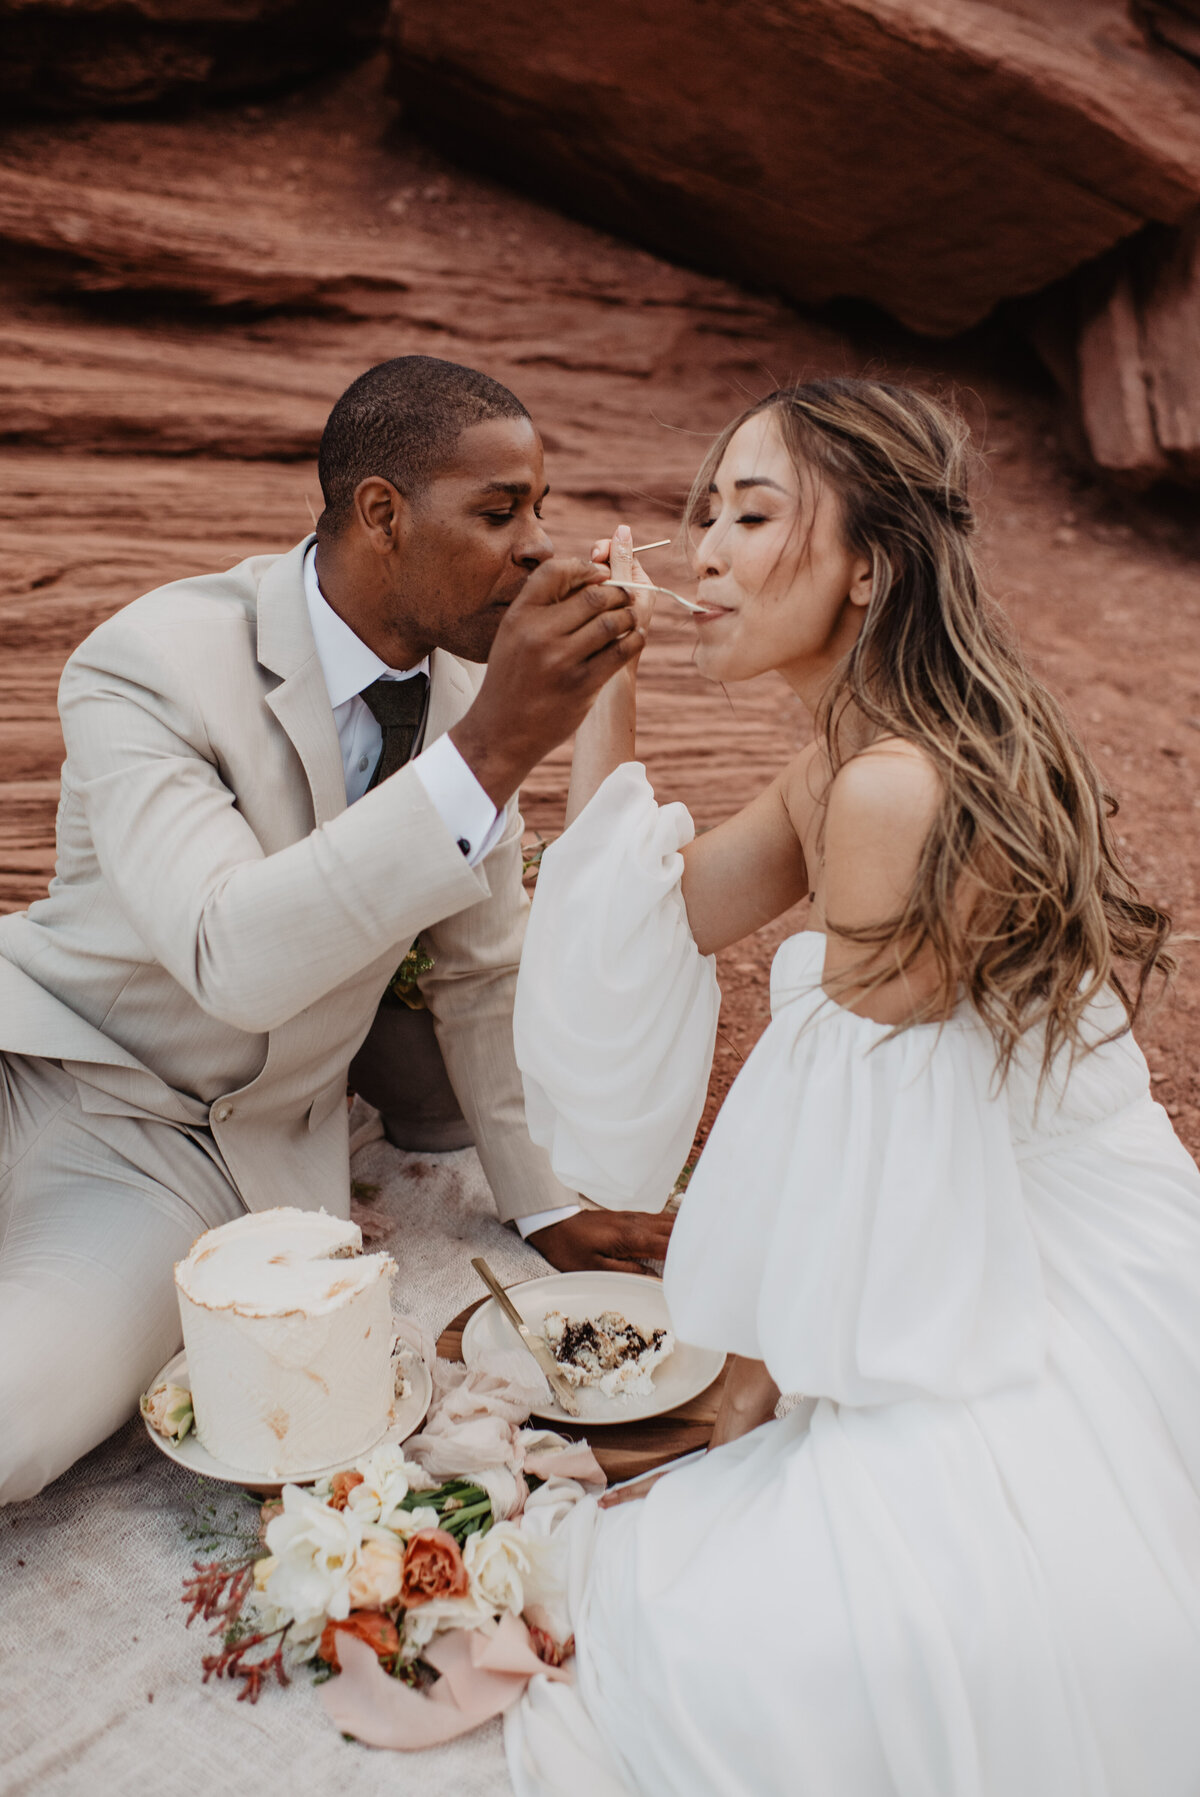 Utah Elopement Photographer captures groom feeding bride cake